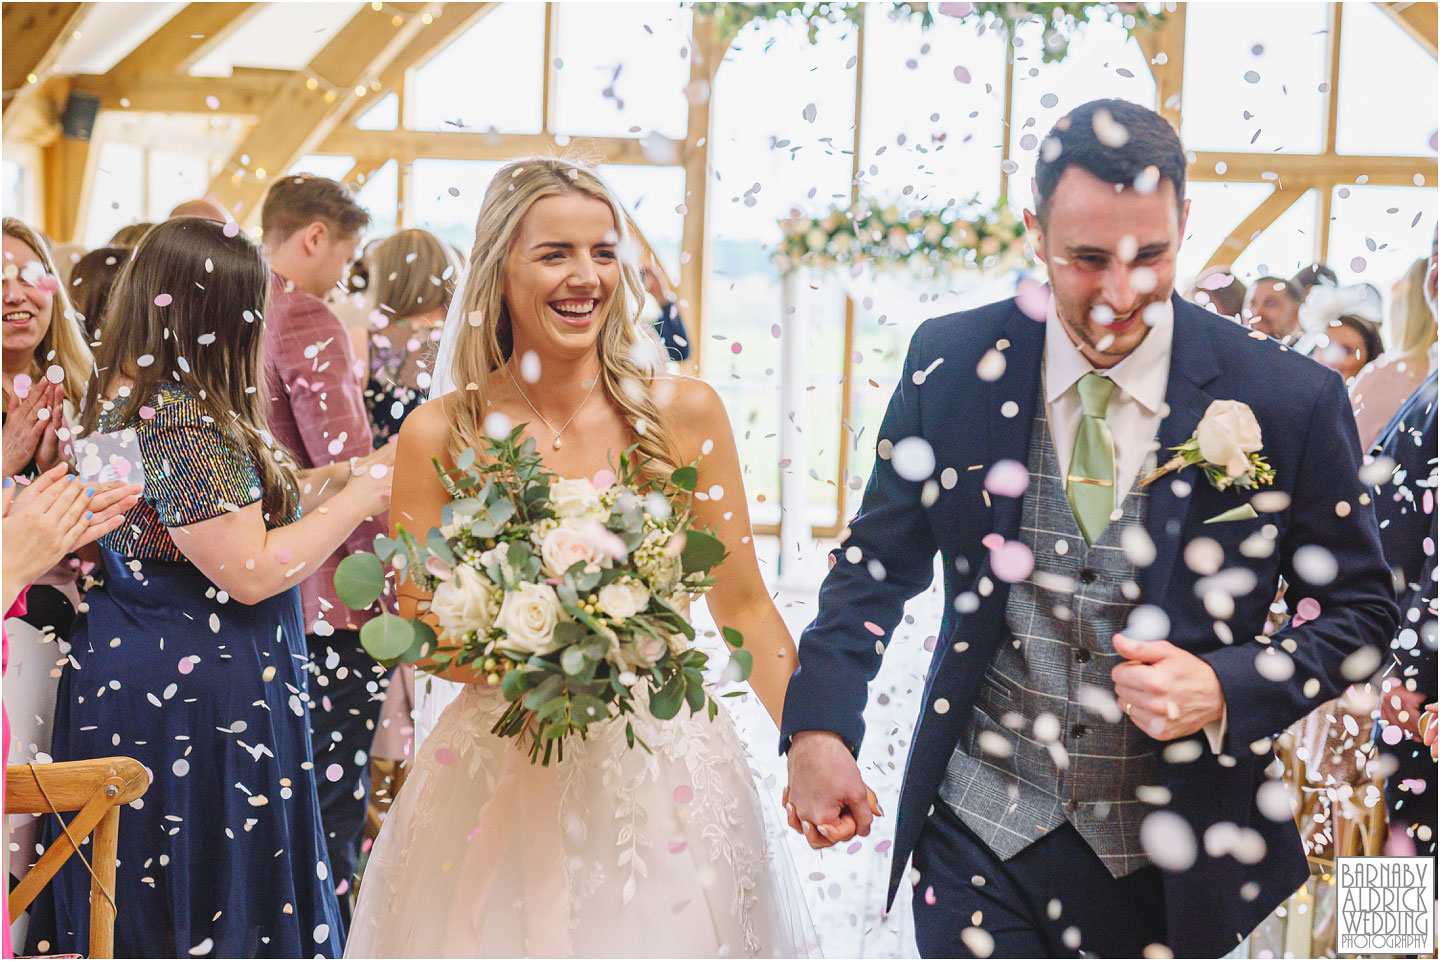 Confetti wedding photo at Sandburn Hall near York by Yorkshire Wedding Photographer Barnaby Aldrick